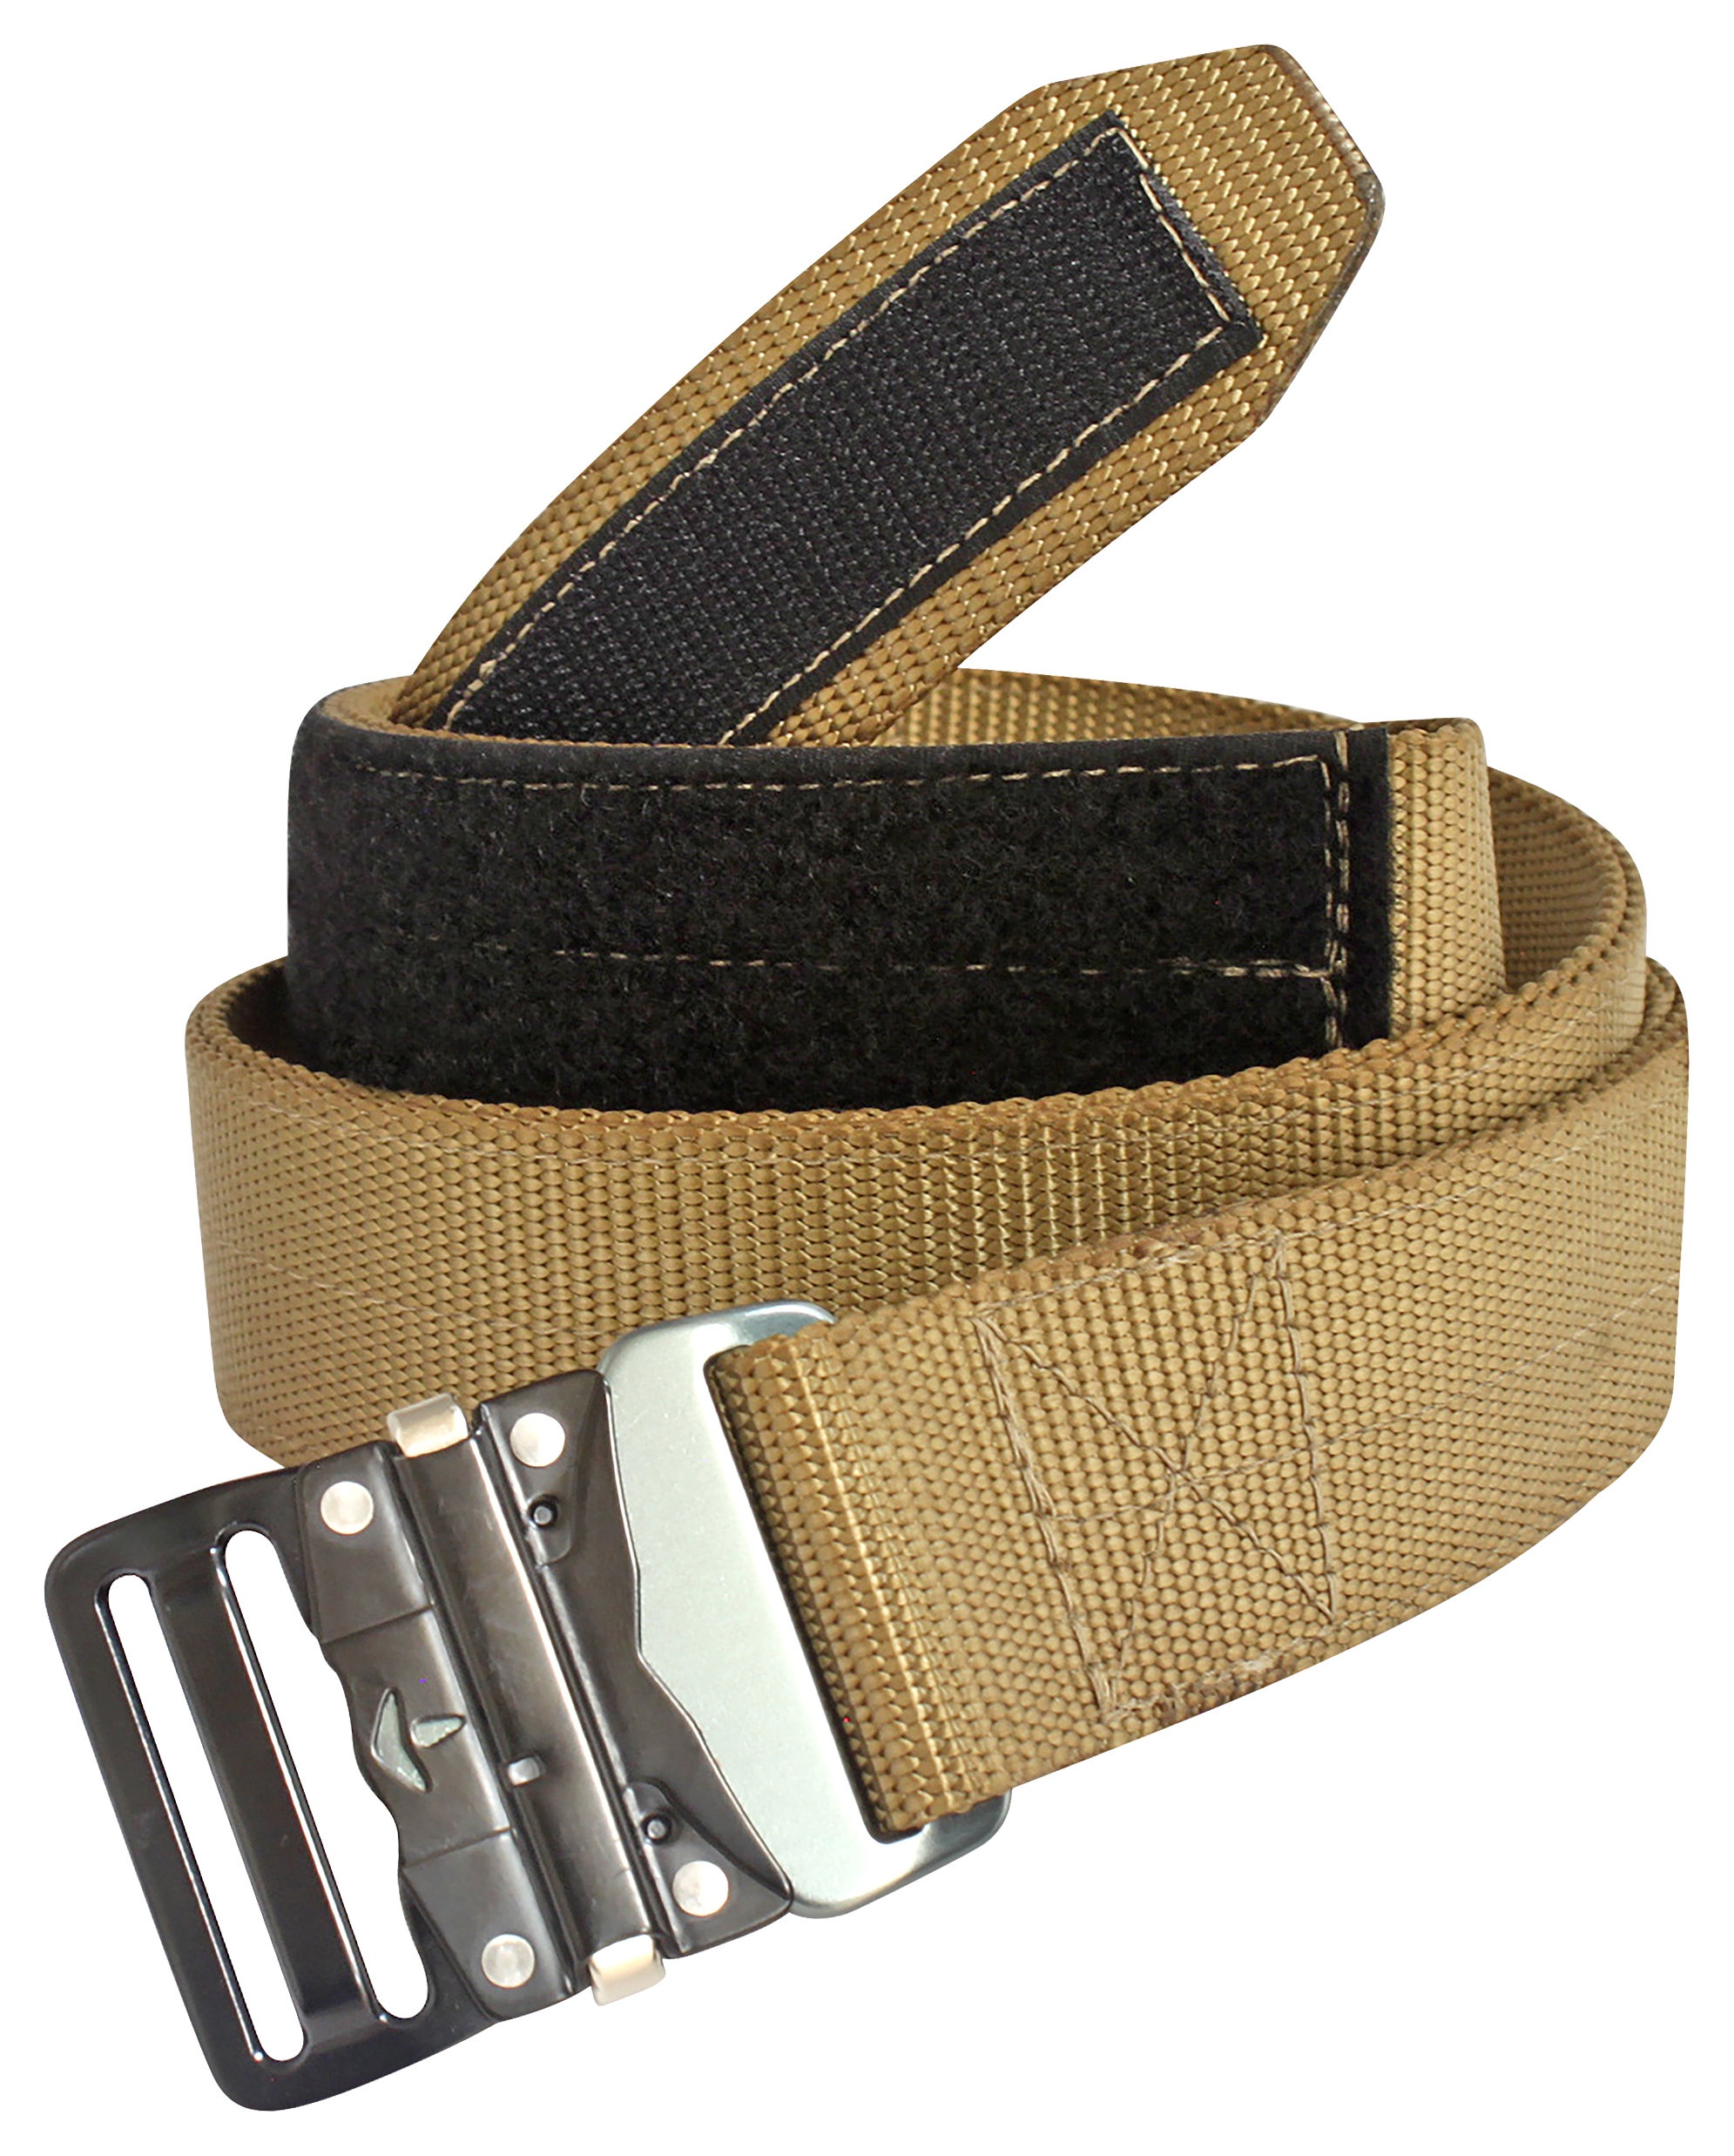 Bison Designs LoPro Heavy-Duty Buckle Belt for Men - Coyote Brown - 2XL